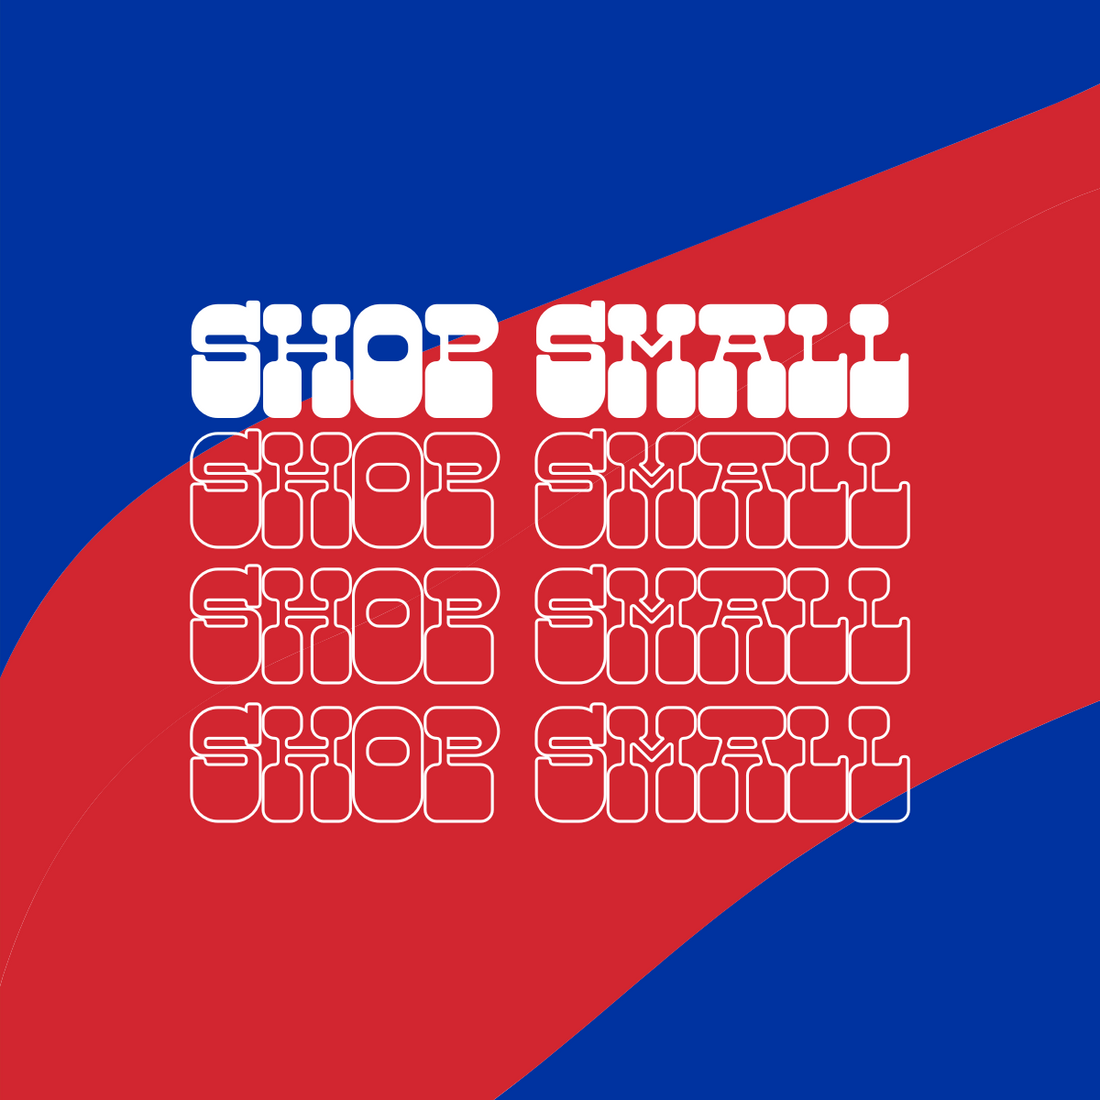 Shop Small, Y'all!